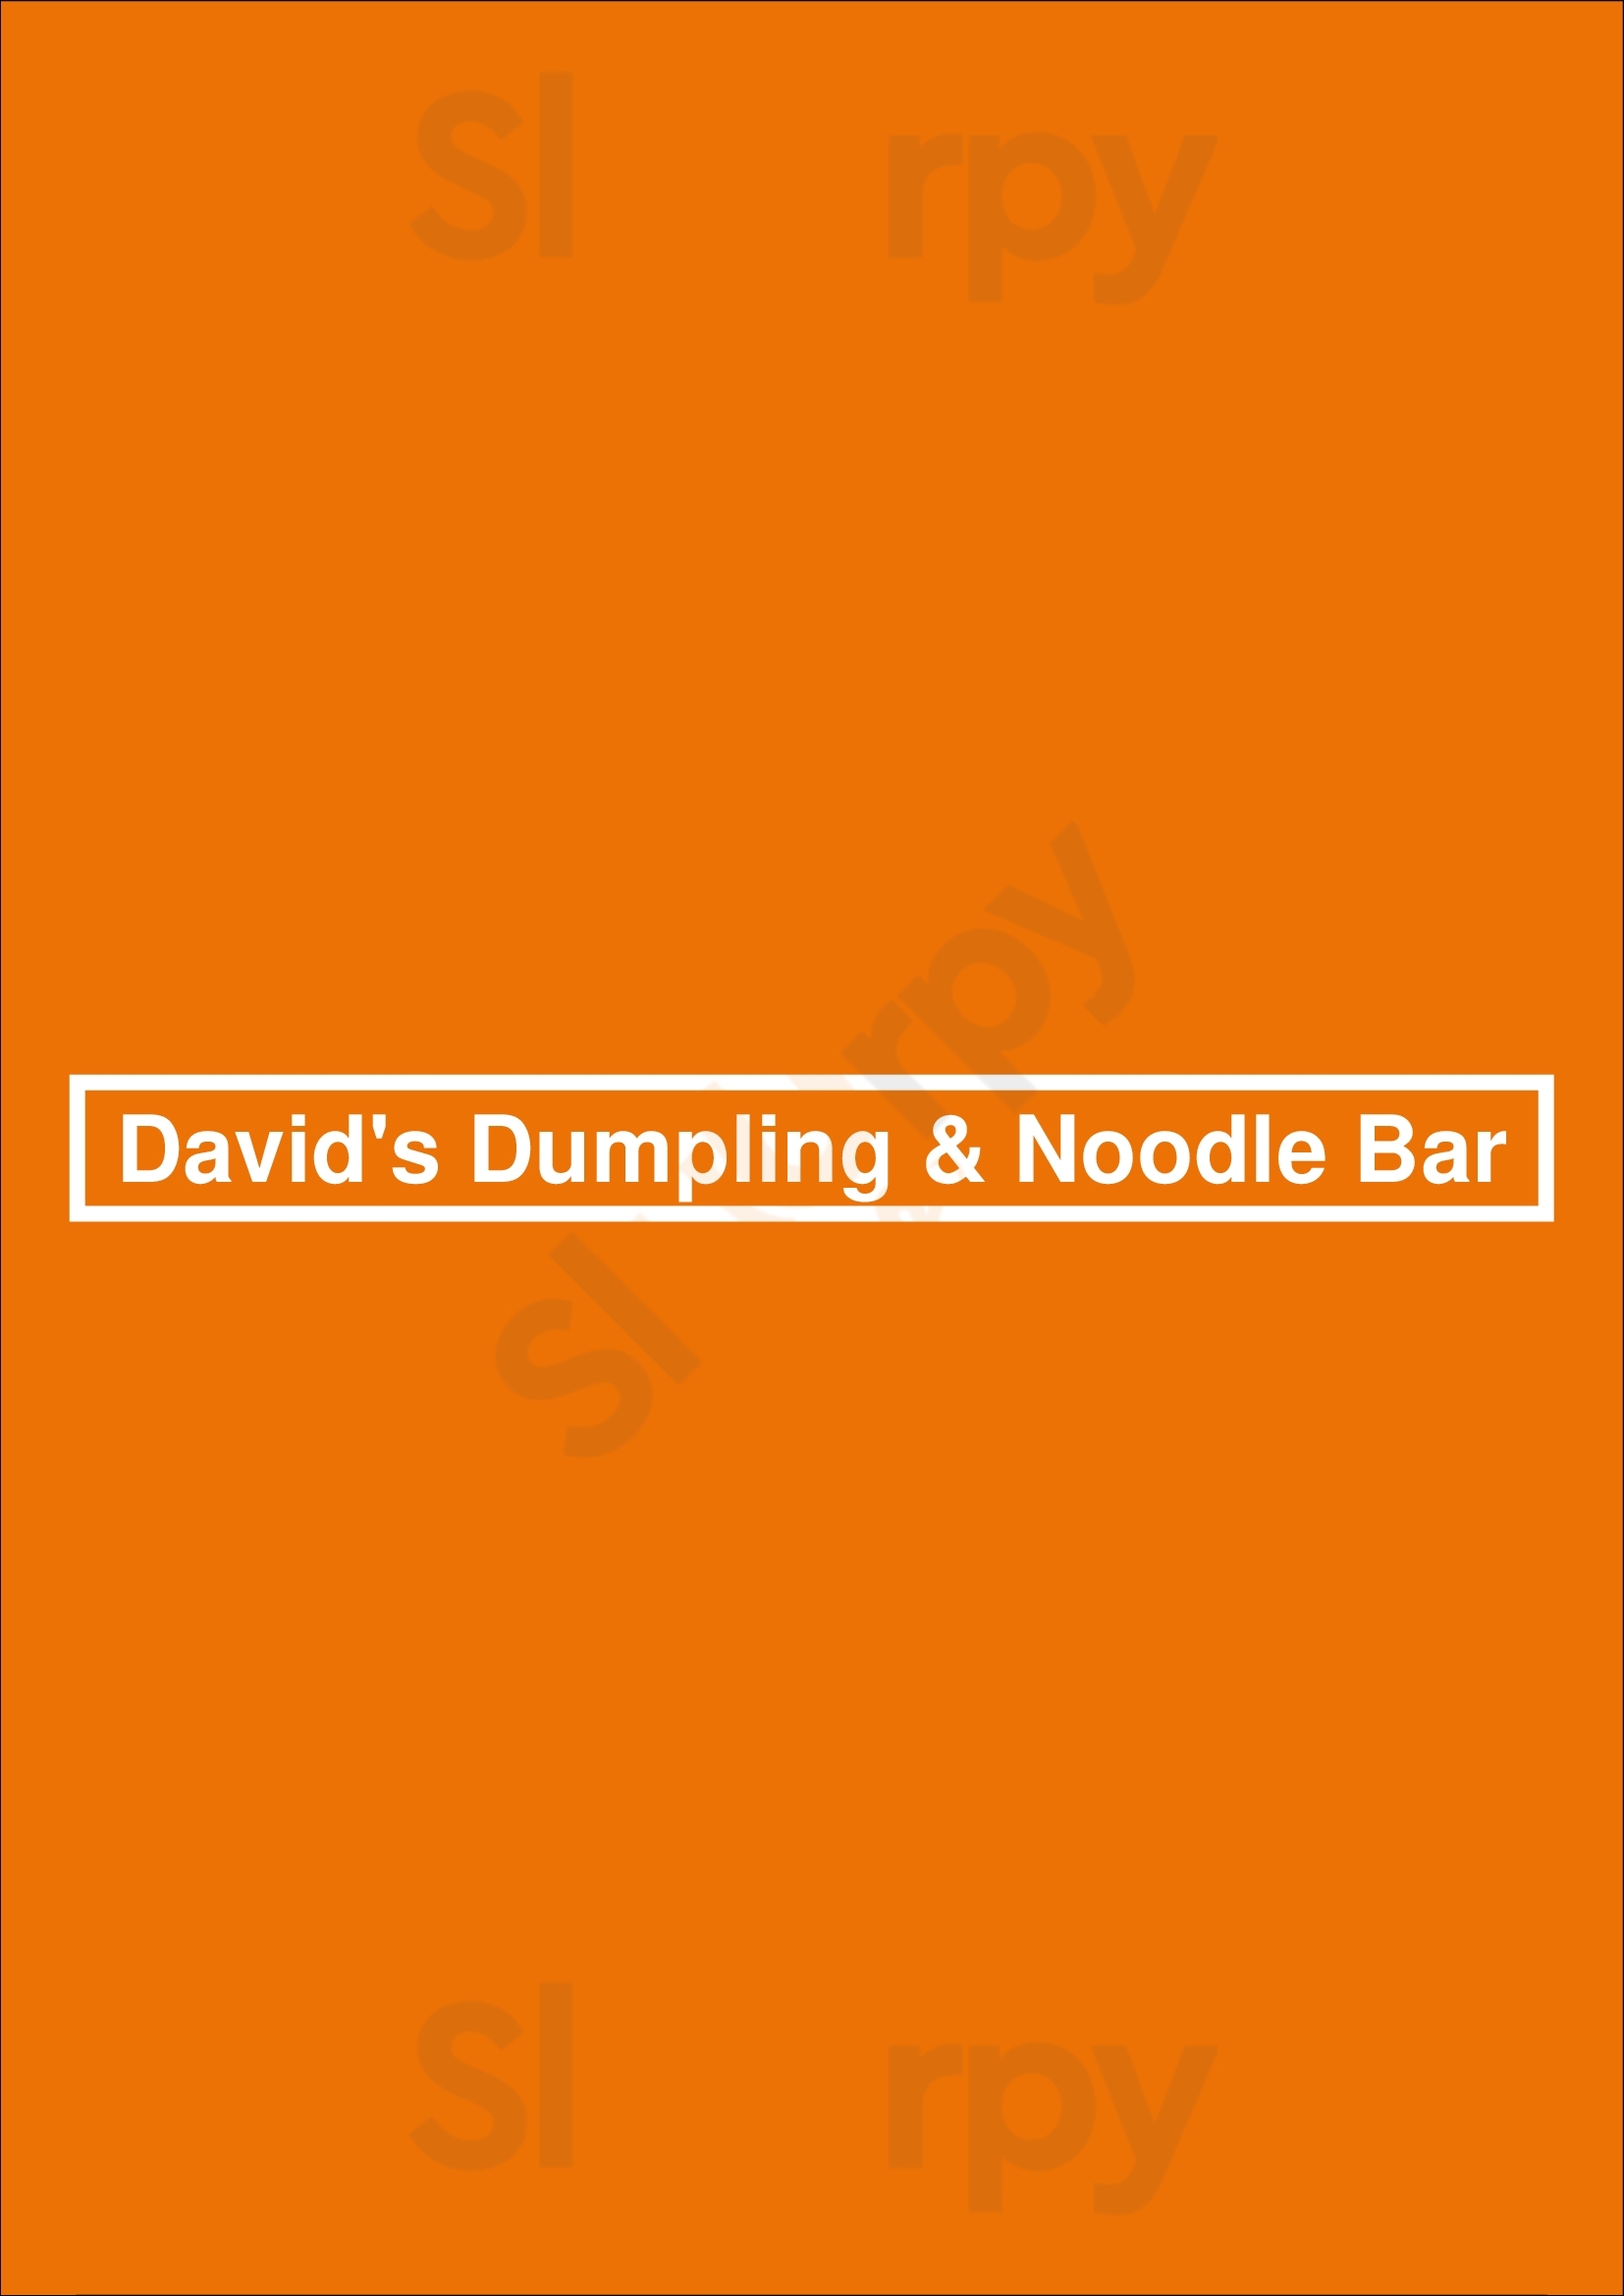 David's Dumpling & Noodle Bar Raleigh Menu - 1